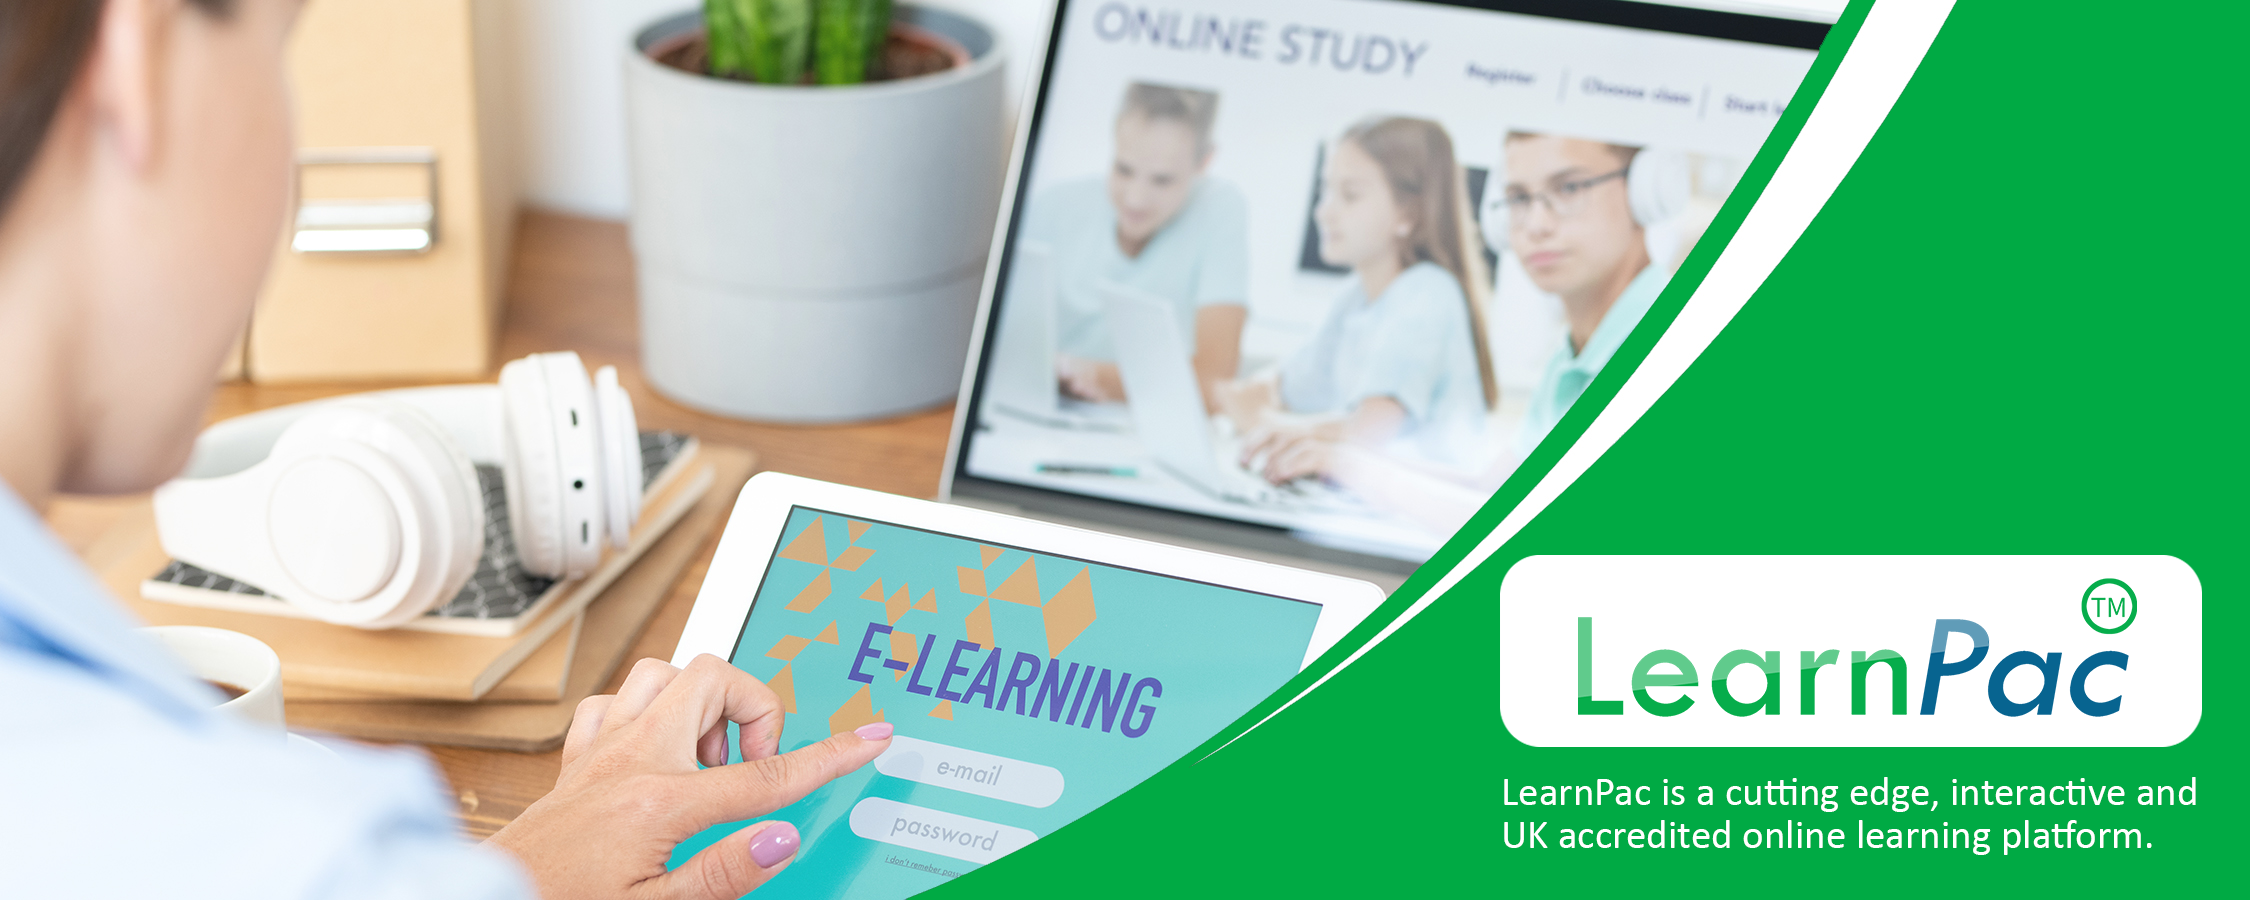 Social Intelligence Training - Online Learning Courses - E-Learning Courses - LearnPac Systems UK -